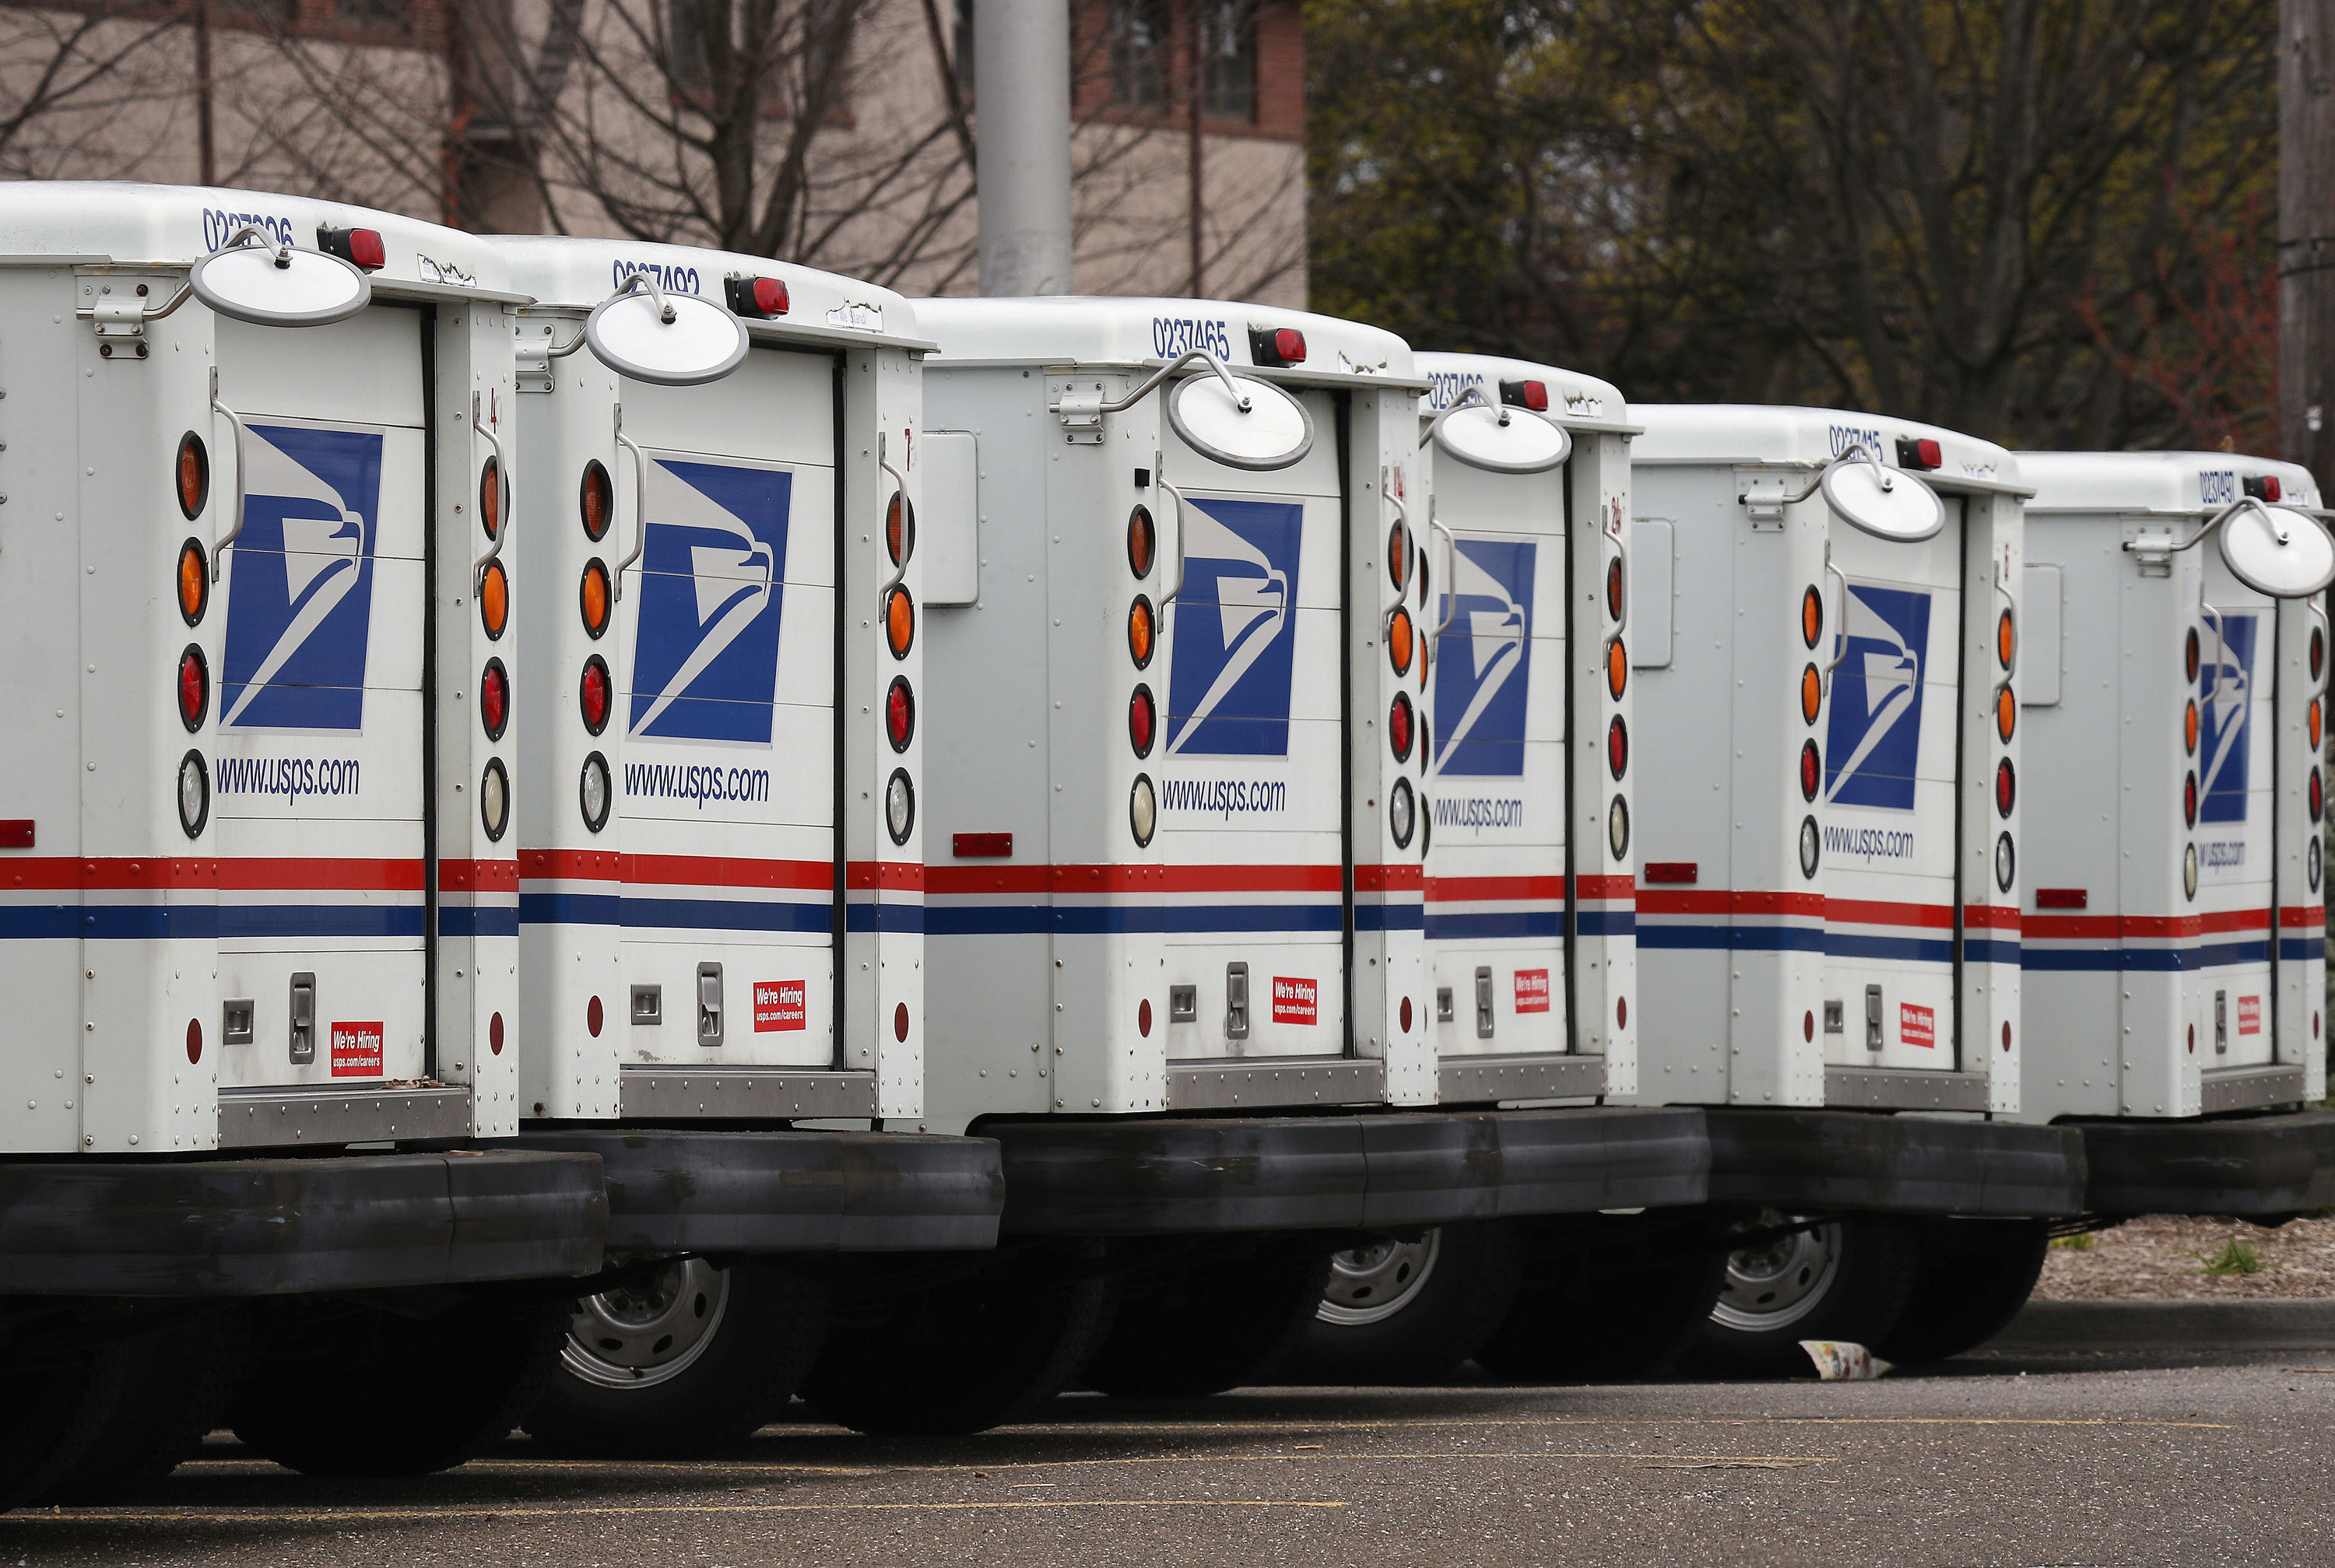 United States Postal Service trucks are seen in April 2020 in Farmingdale, New York.